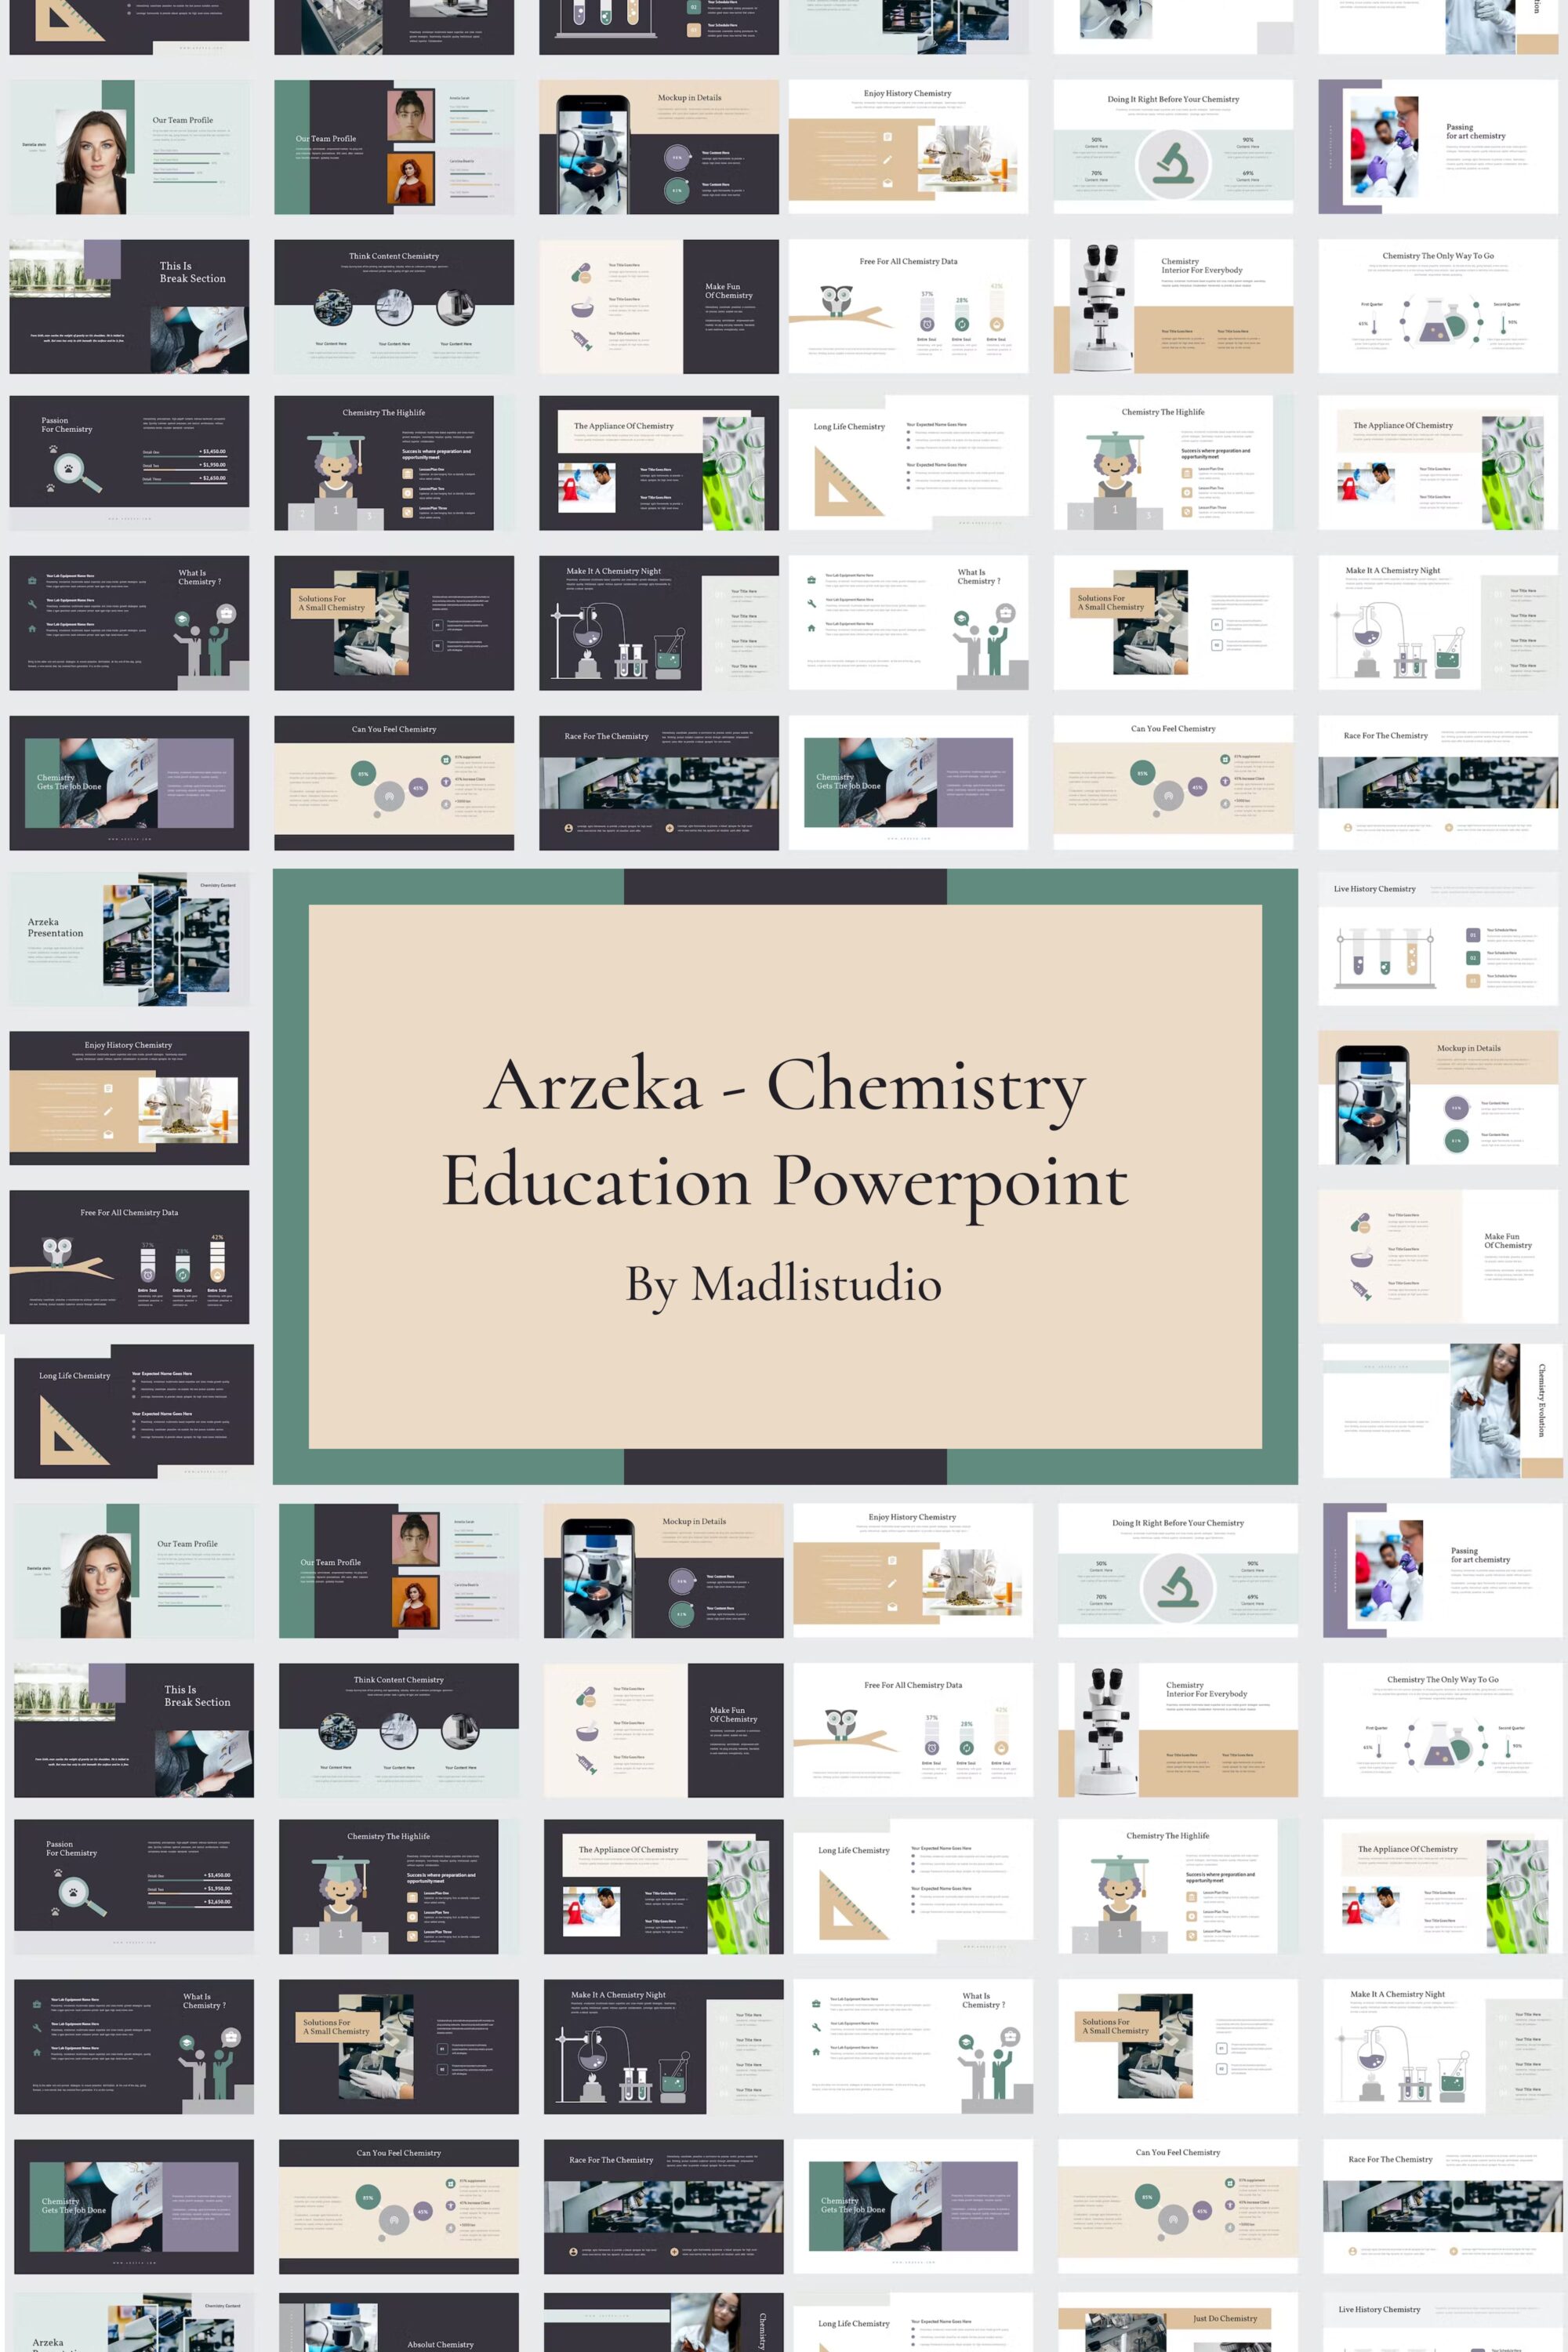 arzeka chemistry education powerpoint 03 298